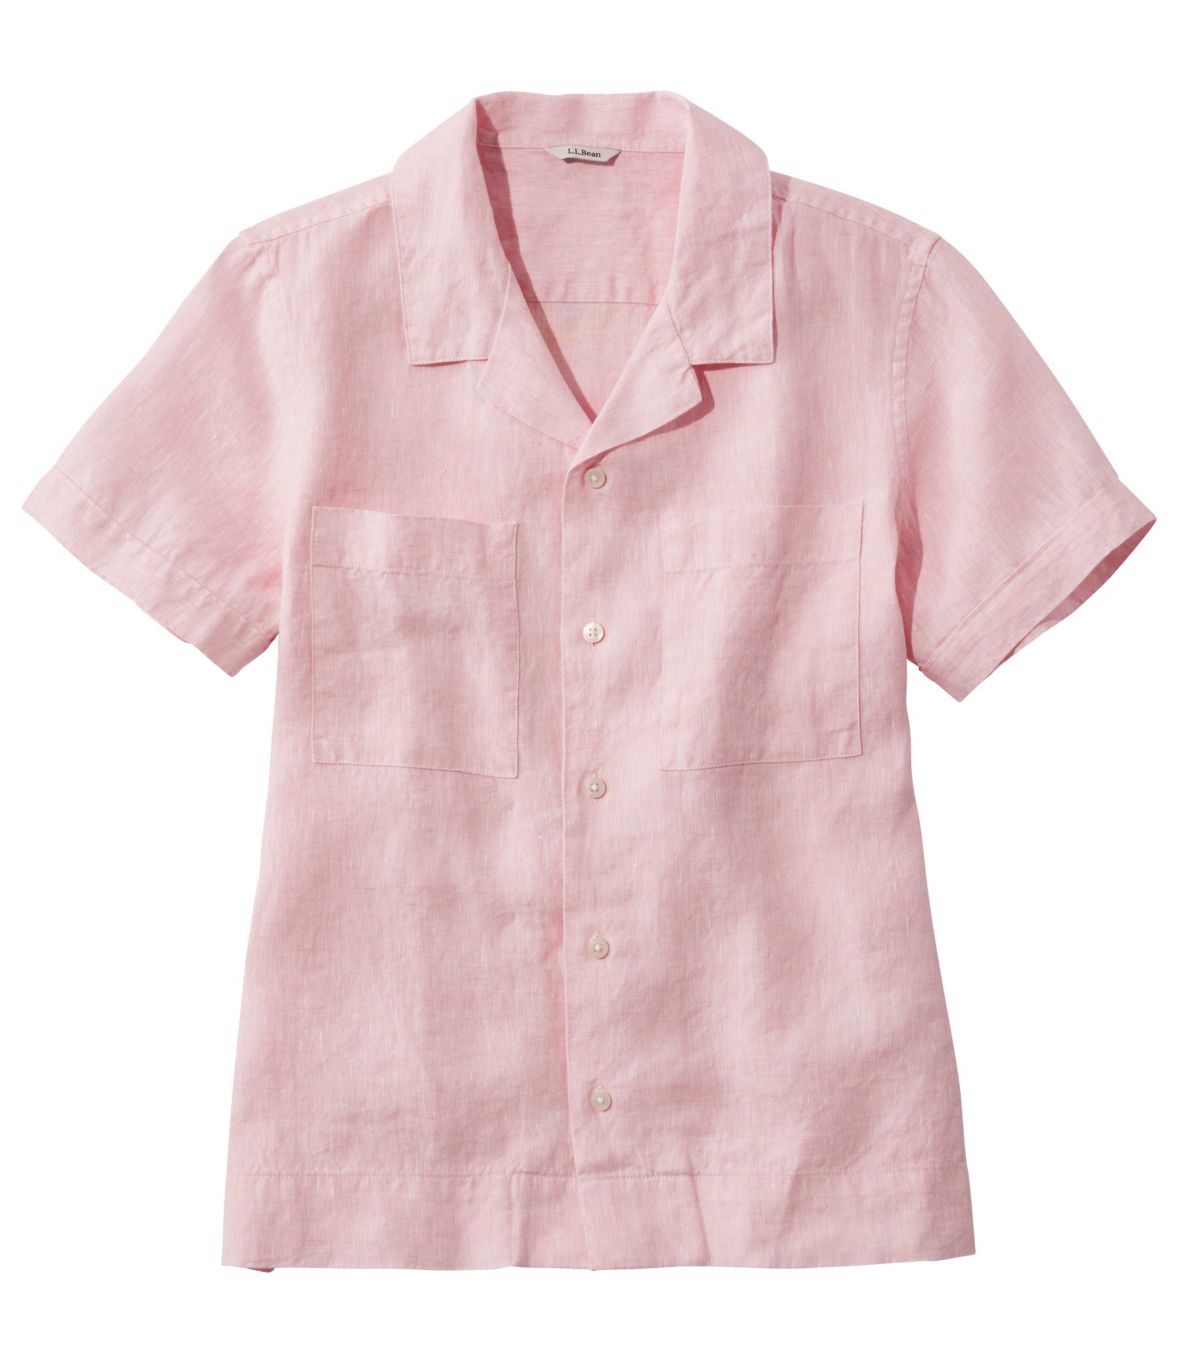 Women's Premium Washable Linen Camp Shirt, Short-Sleeve